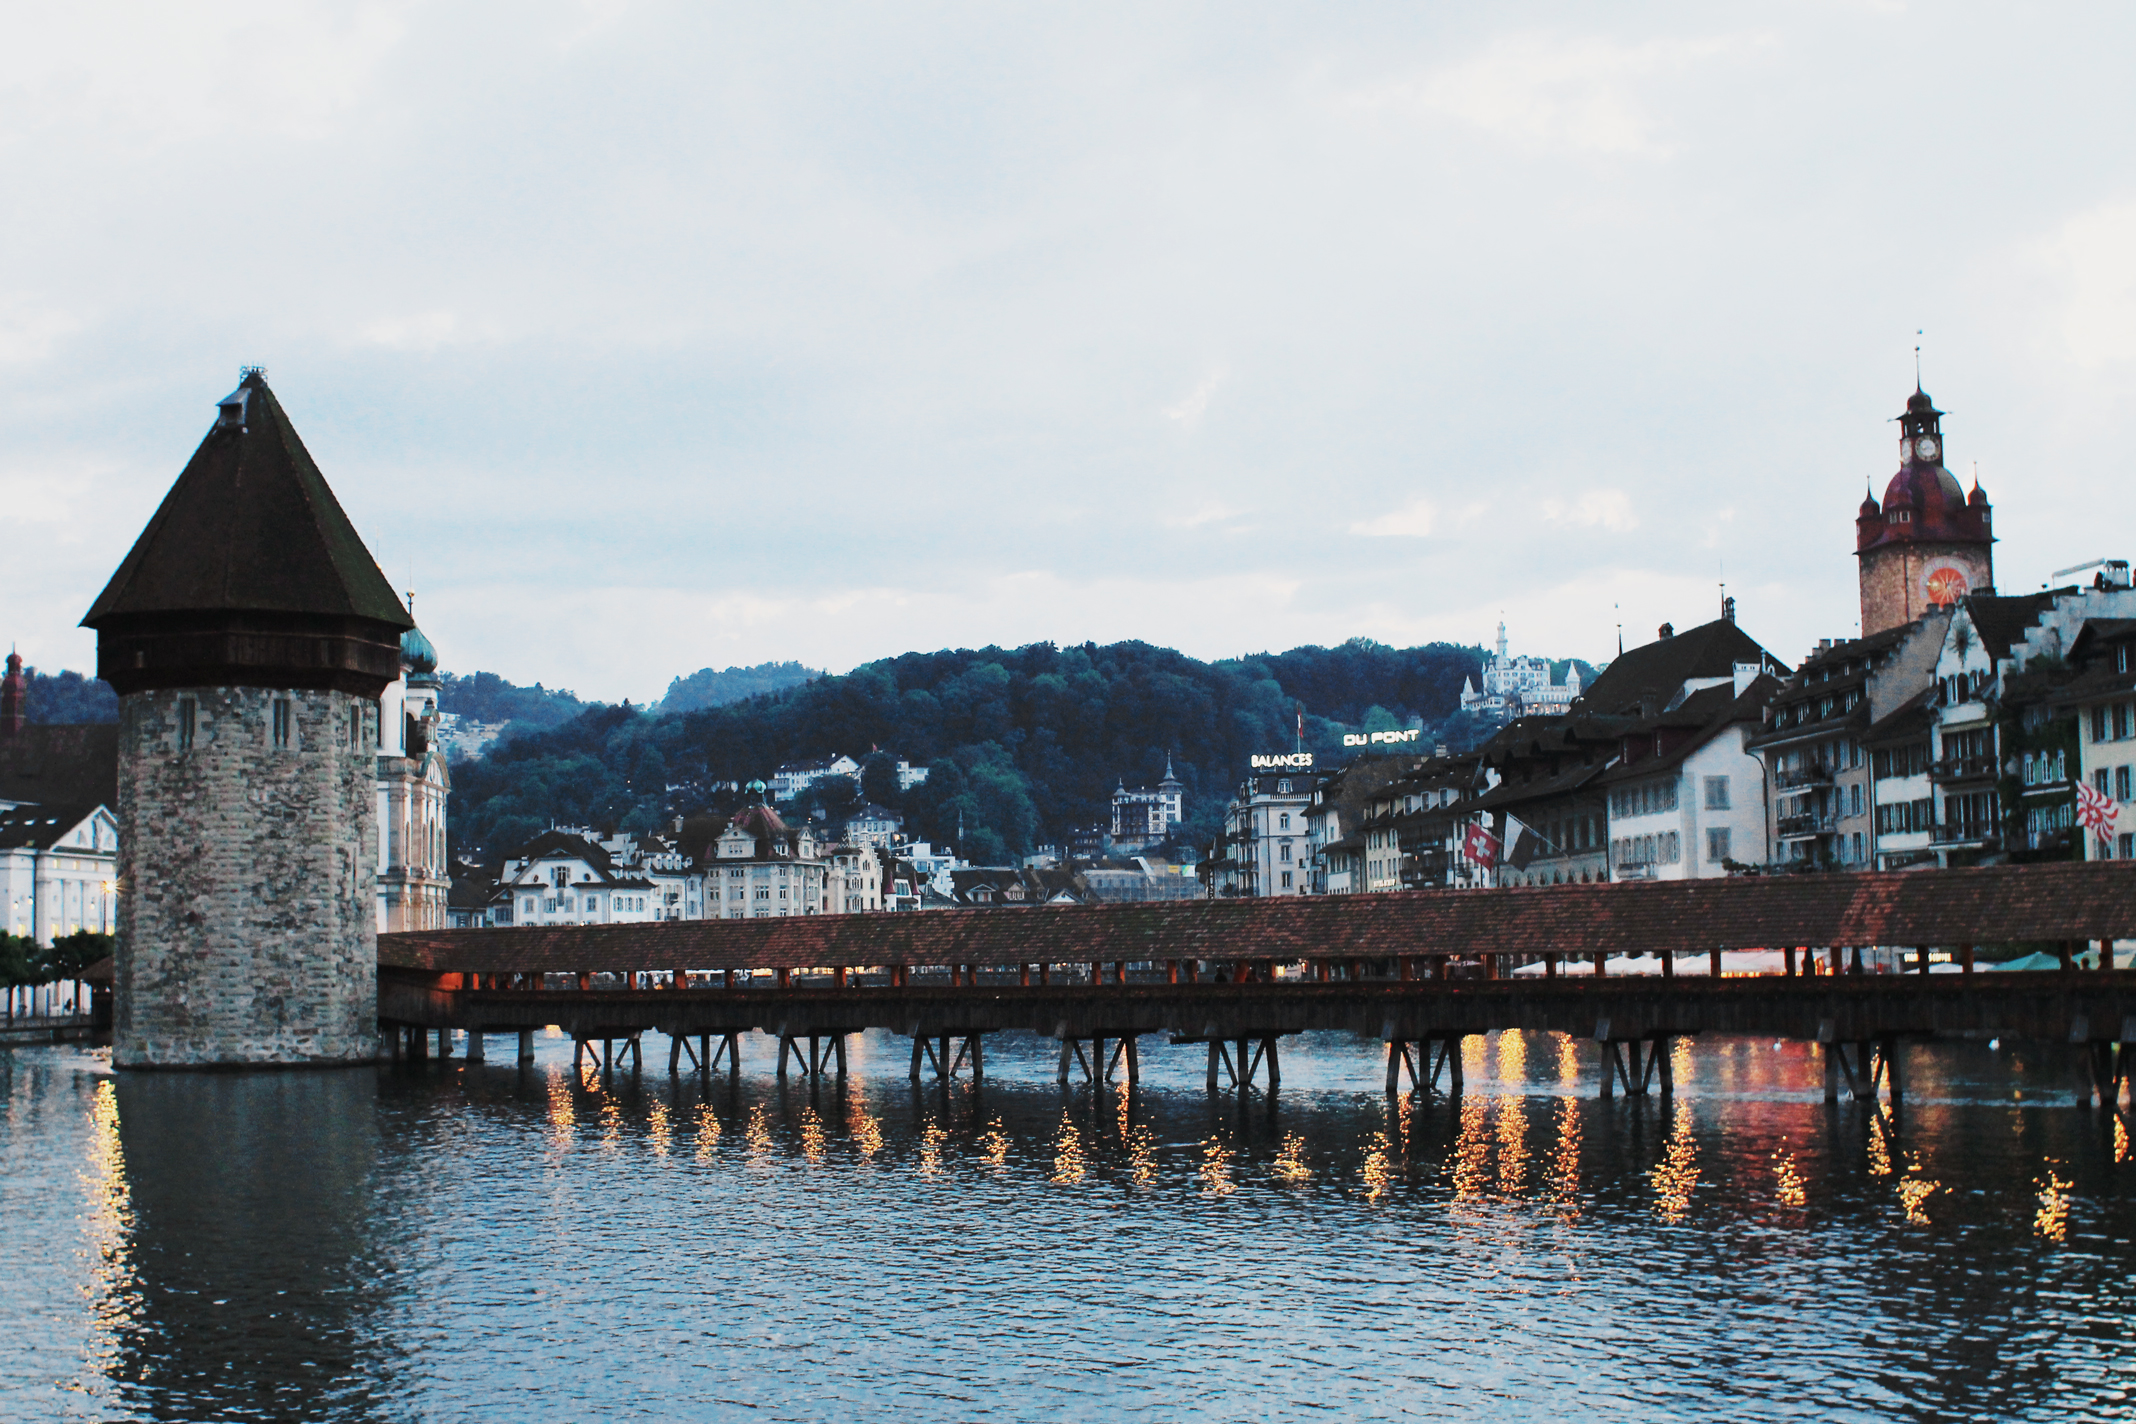 Styleat30 Fashion + Travel Blog - Chapel Bridge + Water Tower - Lucerne, Switzerland - 26